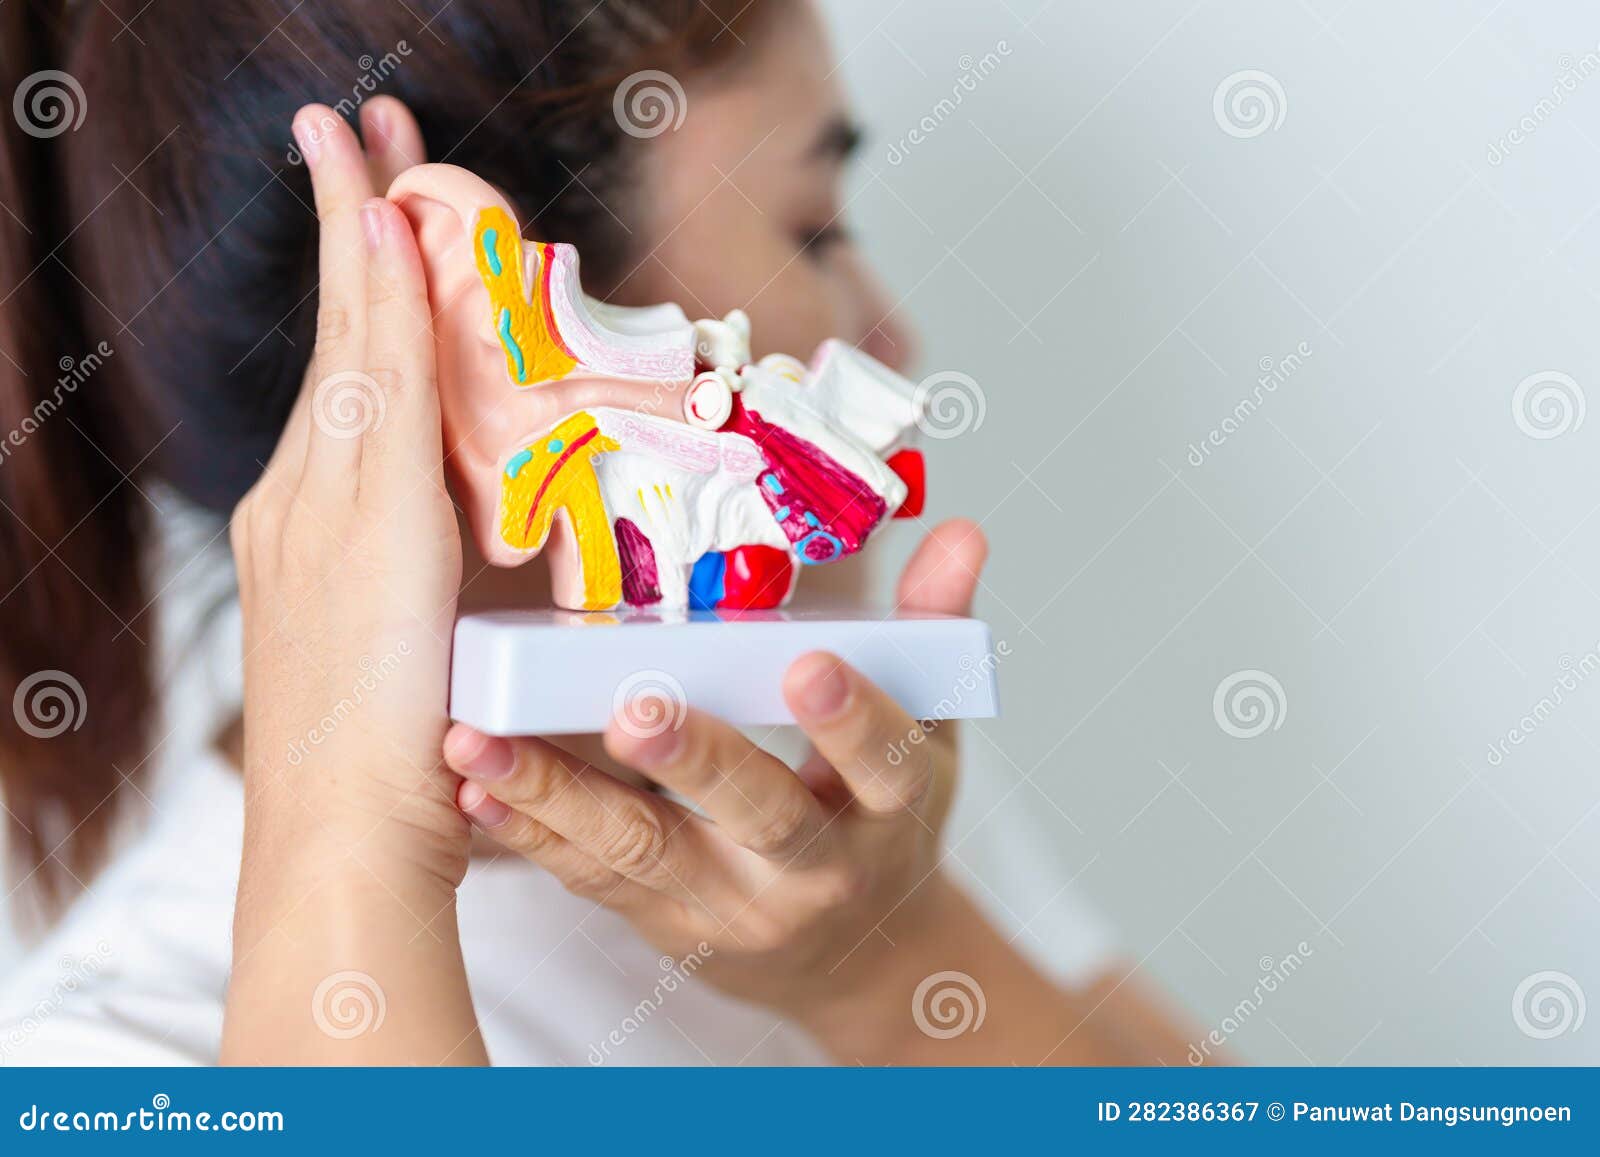 woman holding human ear anatomy model. ear disease, atresia, otitis media, pertorated eardrum, meniere syndrome, otolaryngologist